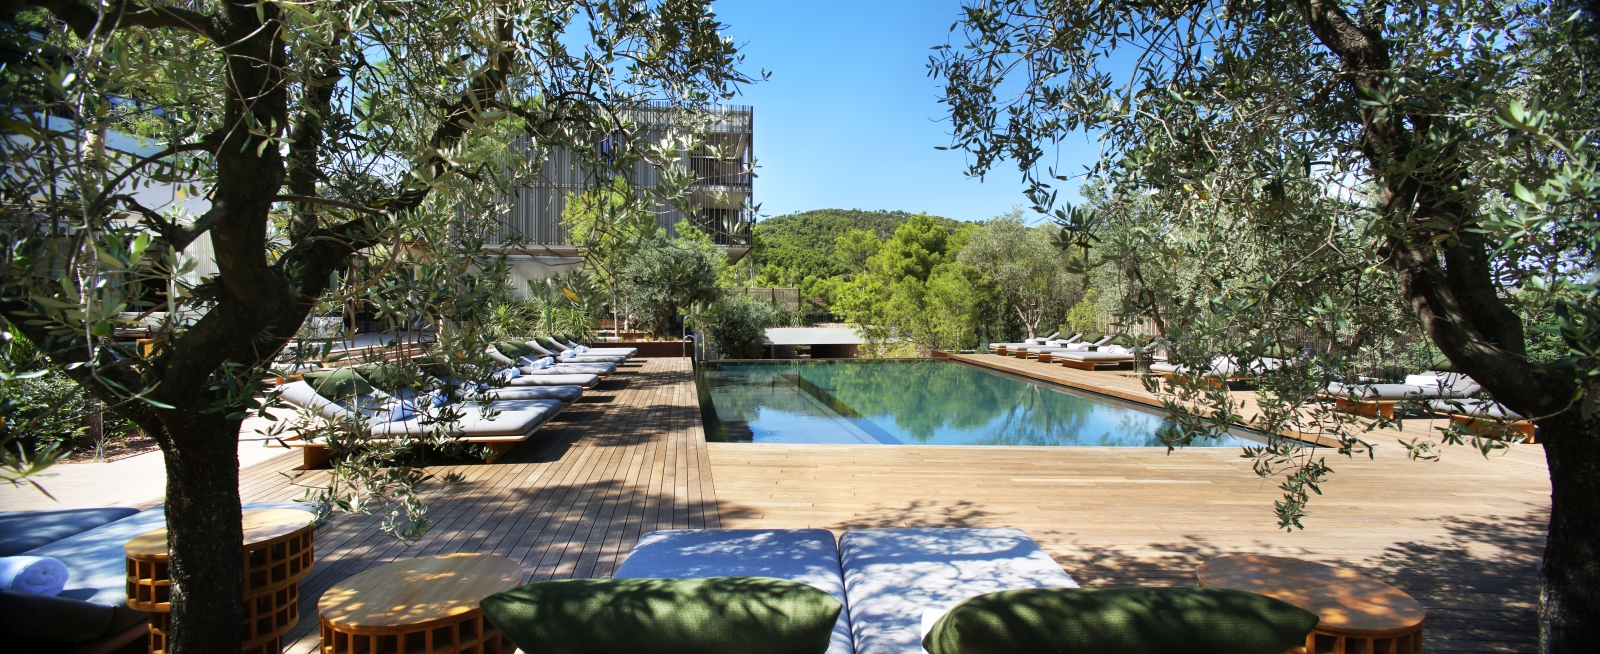 Loungers and olive trees around the pool at luxury resort Maslina on Hvar, Croatia